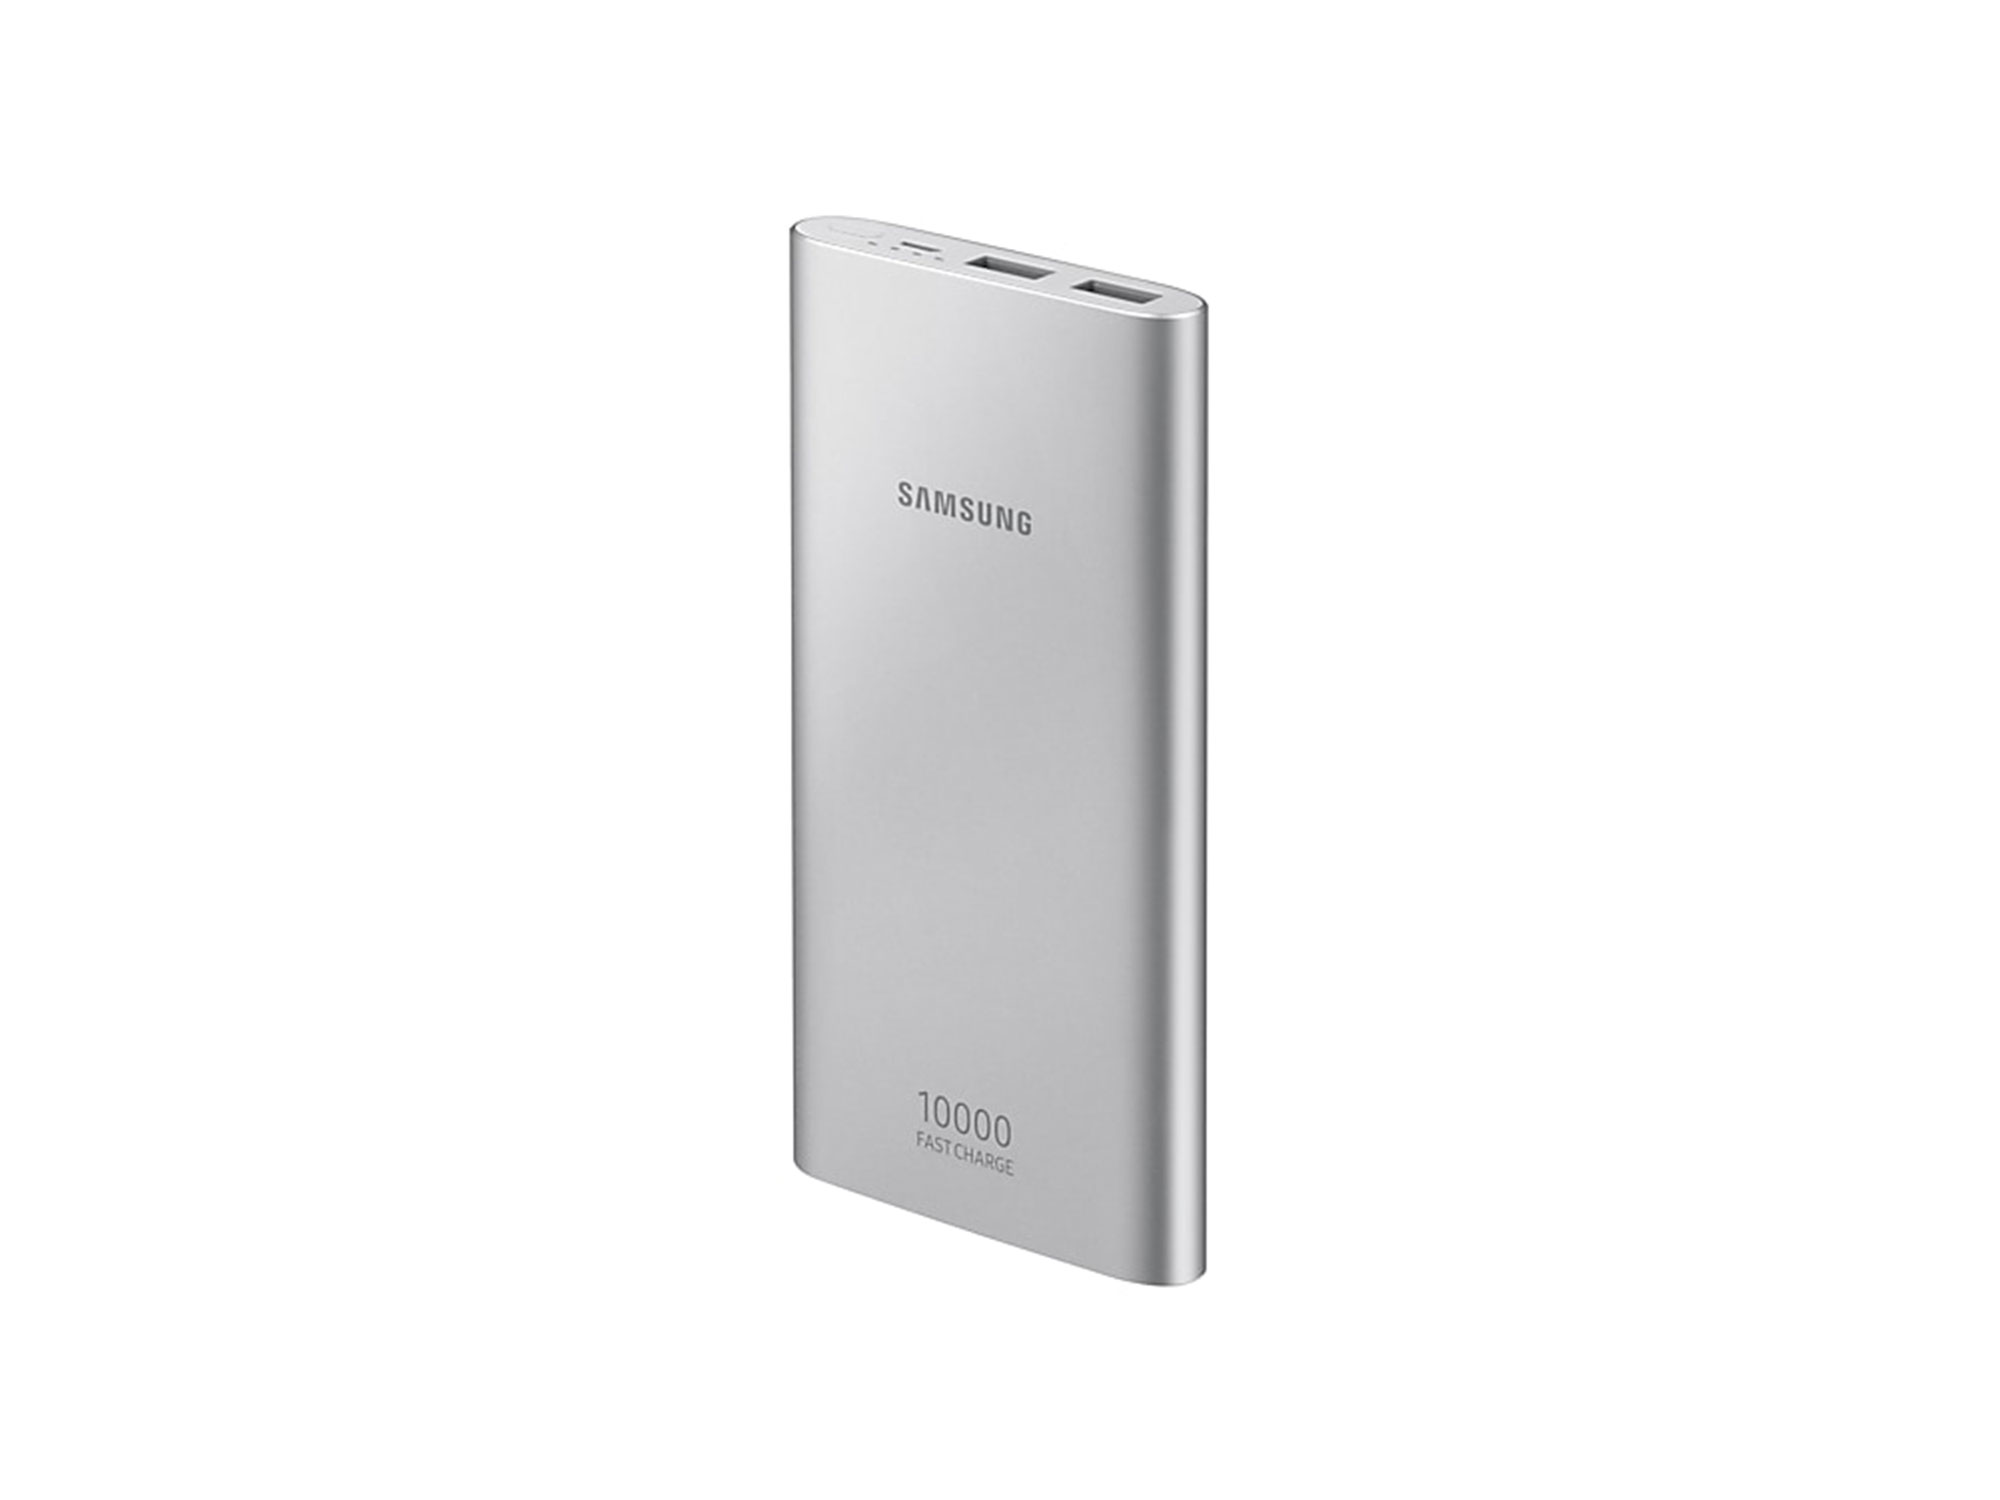 Samsung eksterna baterija EB-P1100BSEGWW